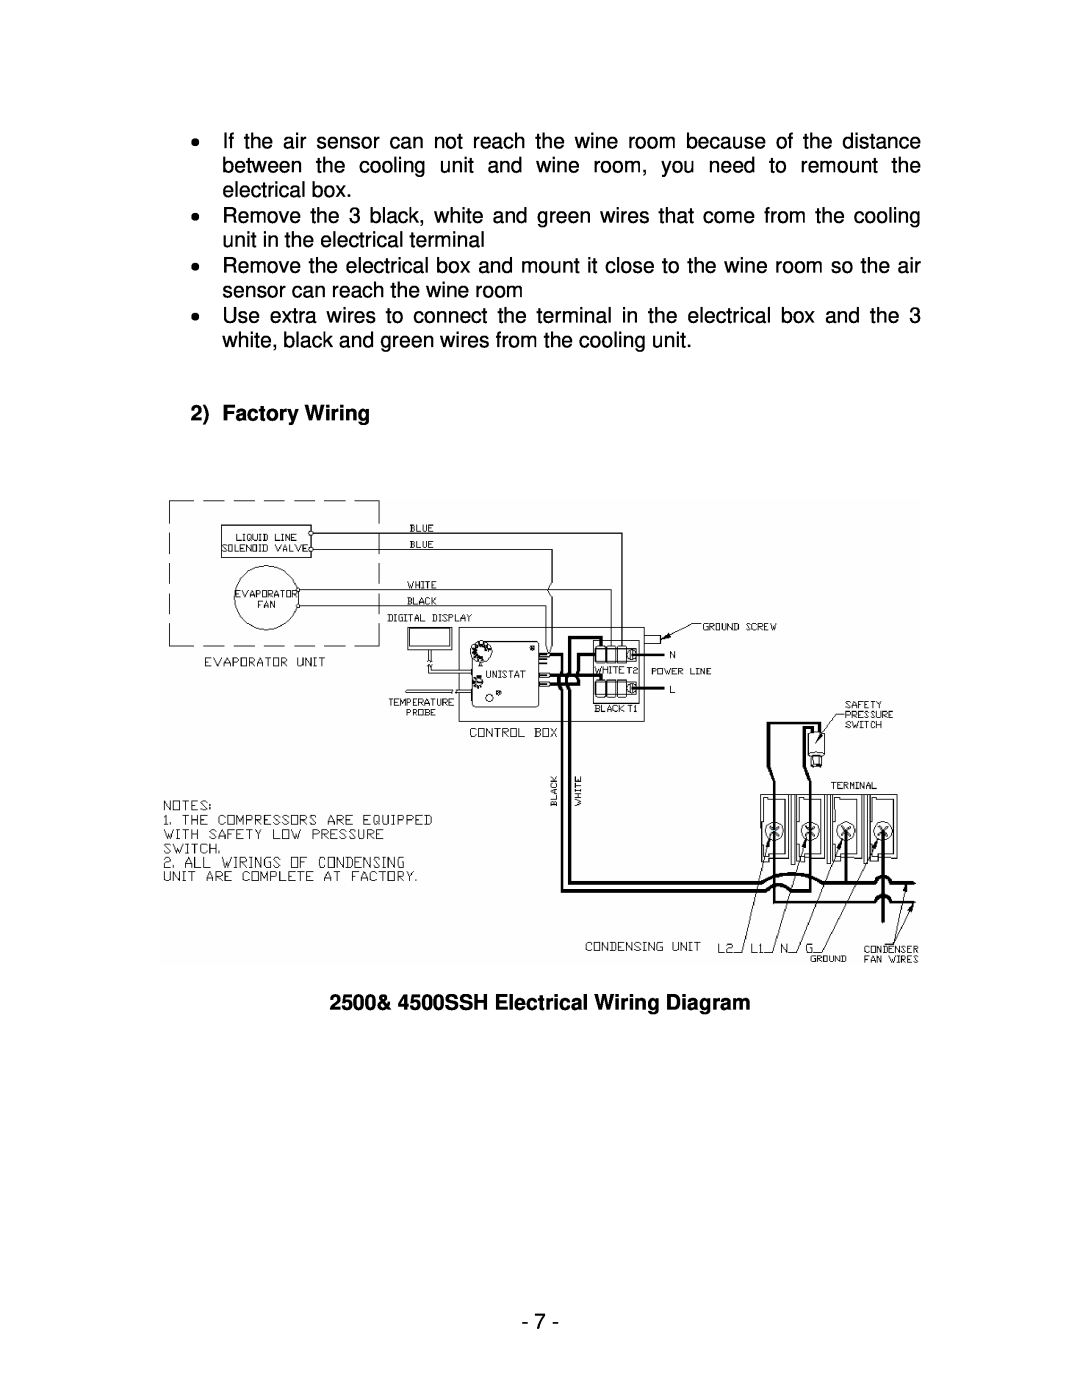 Vinotemp 8500SSH, WM 6500SSH, WM 2500SSH manual Factory Wiring, 2500& 4500SSH Electrical Wiring Diagram 